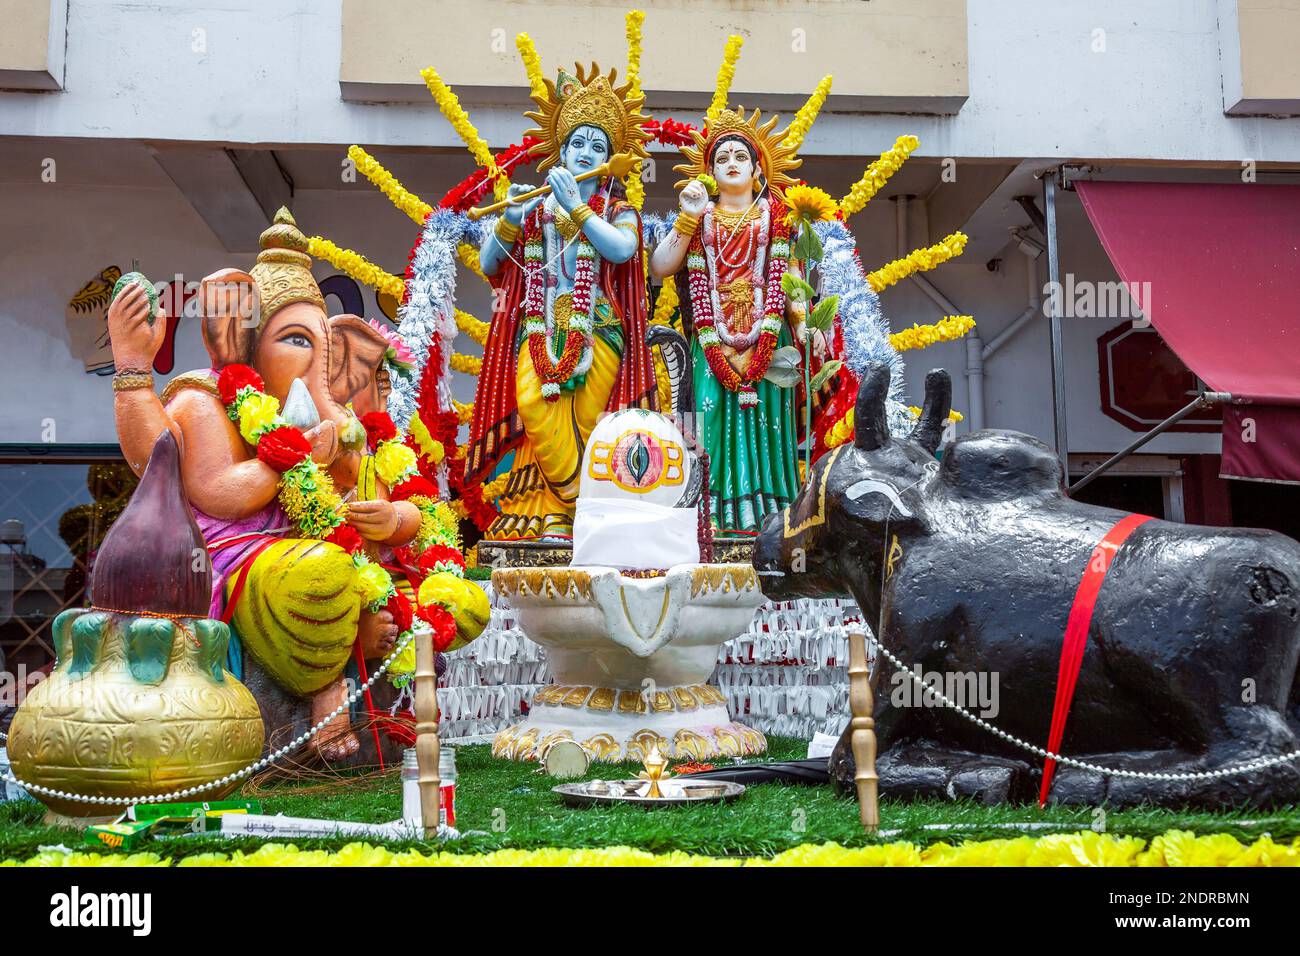 statues of Hindu deities during Mahashivratree festival in Mauritius. Stock Photo